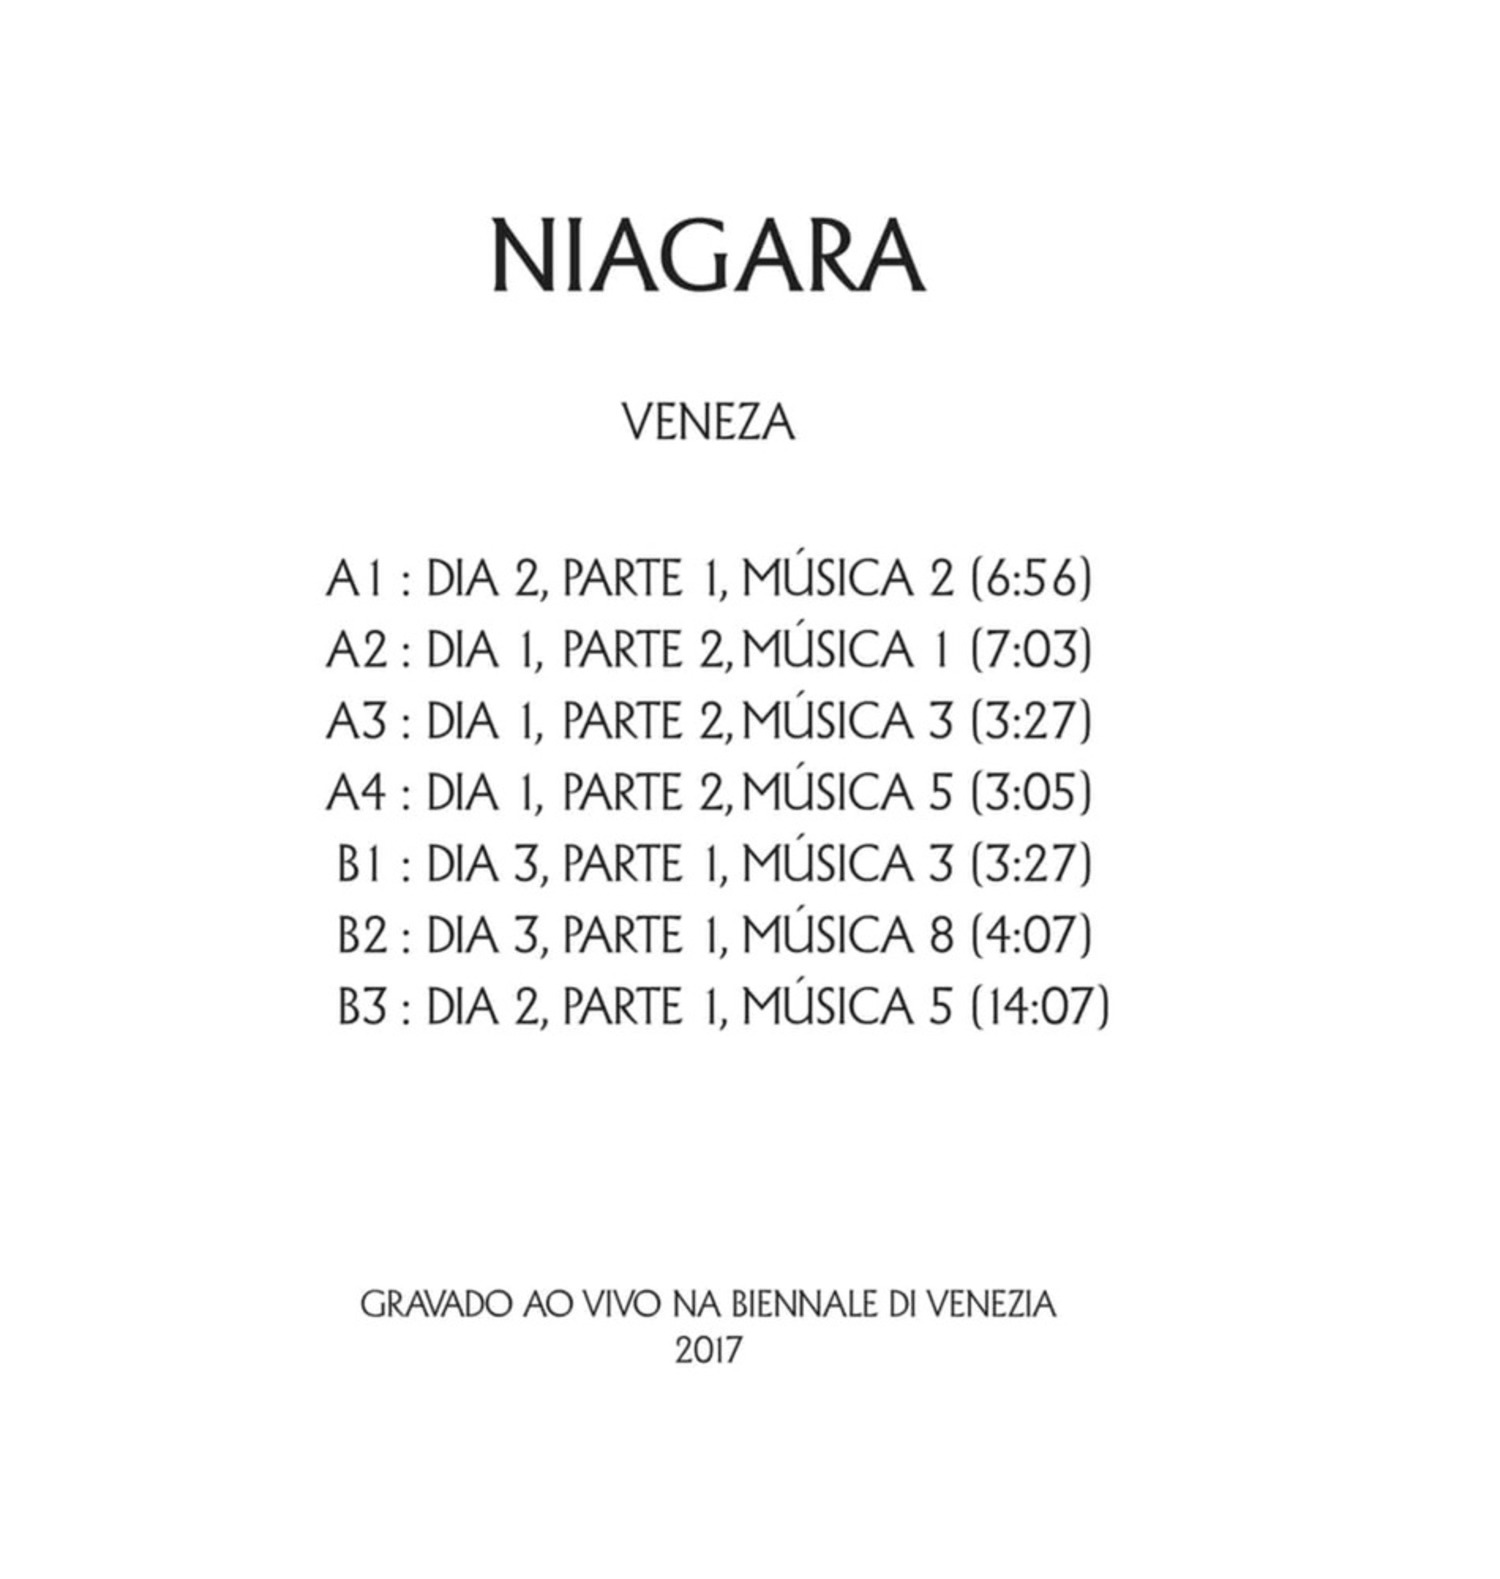 Niagara - VENEZA 